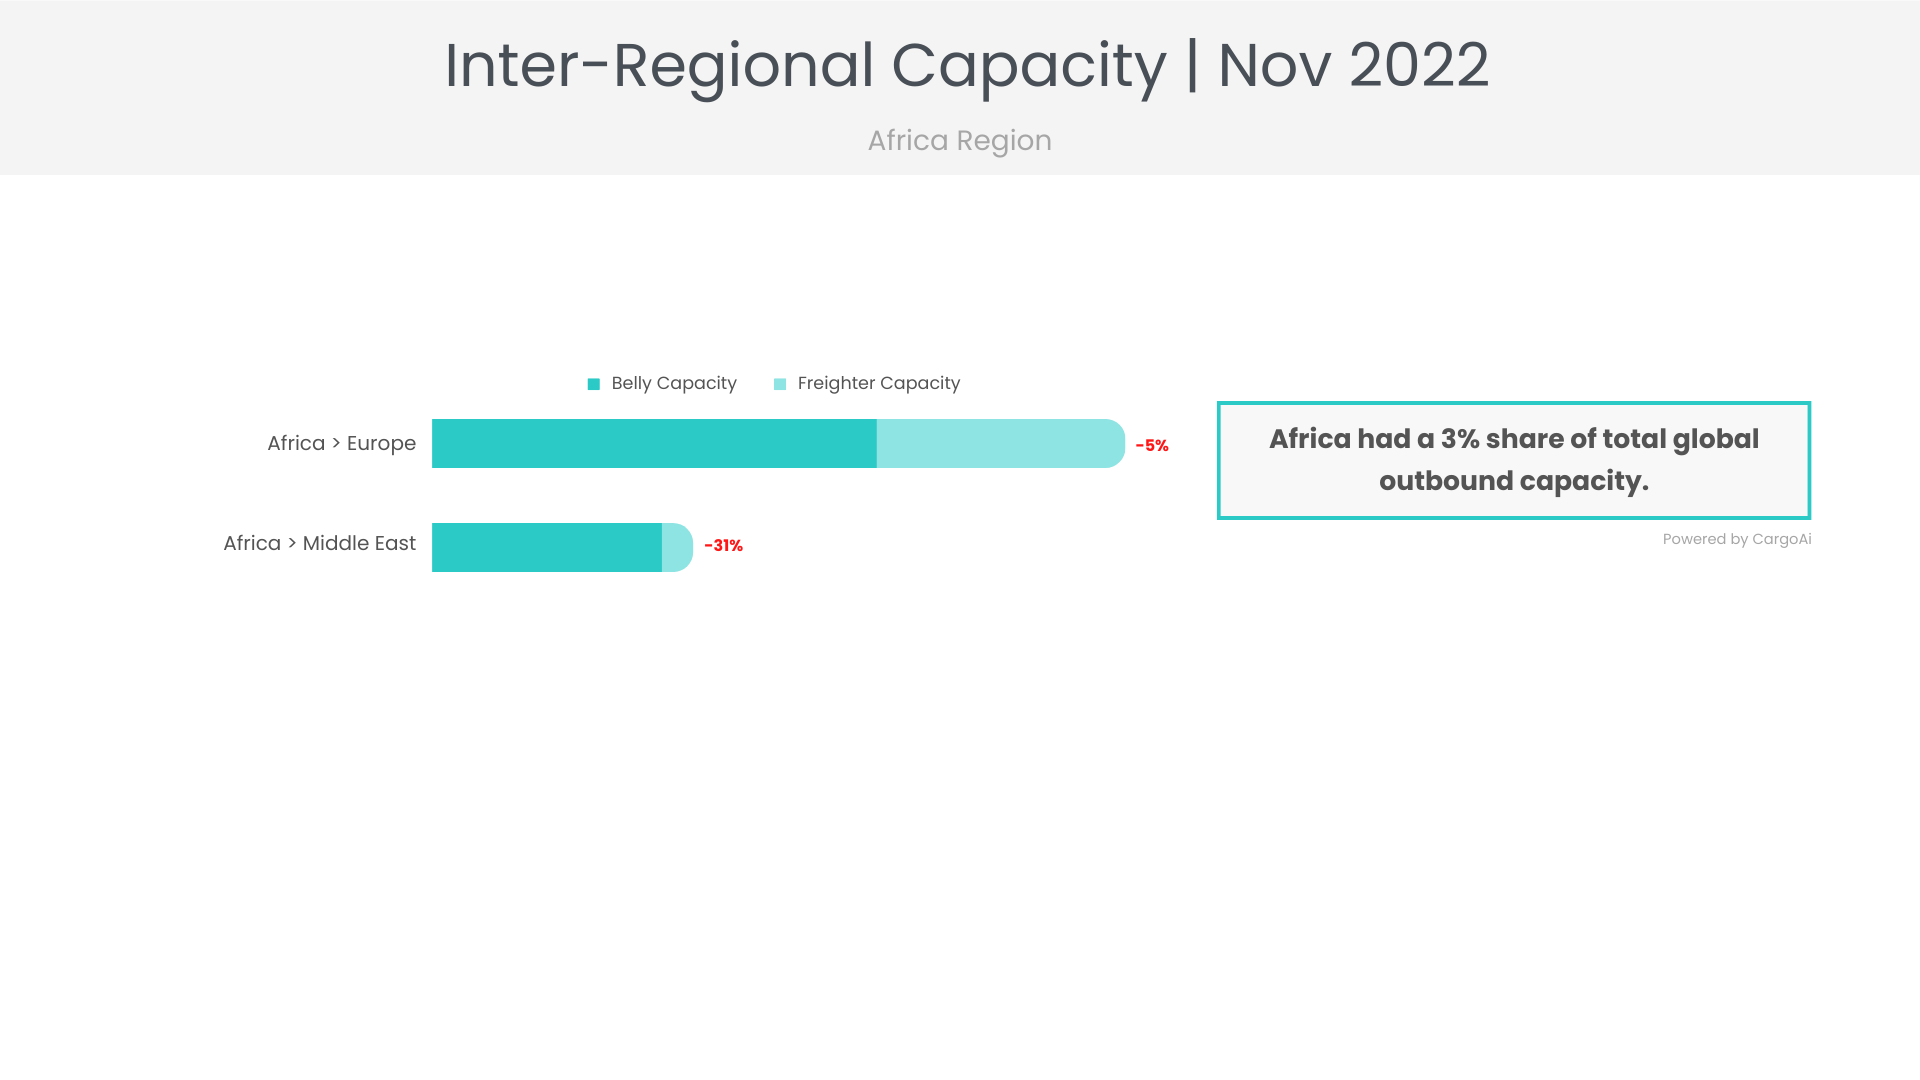 Air cargo capacity of Africa region of Nov 2022